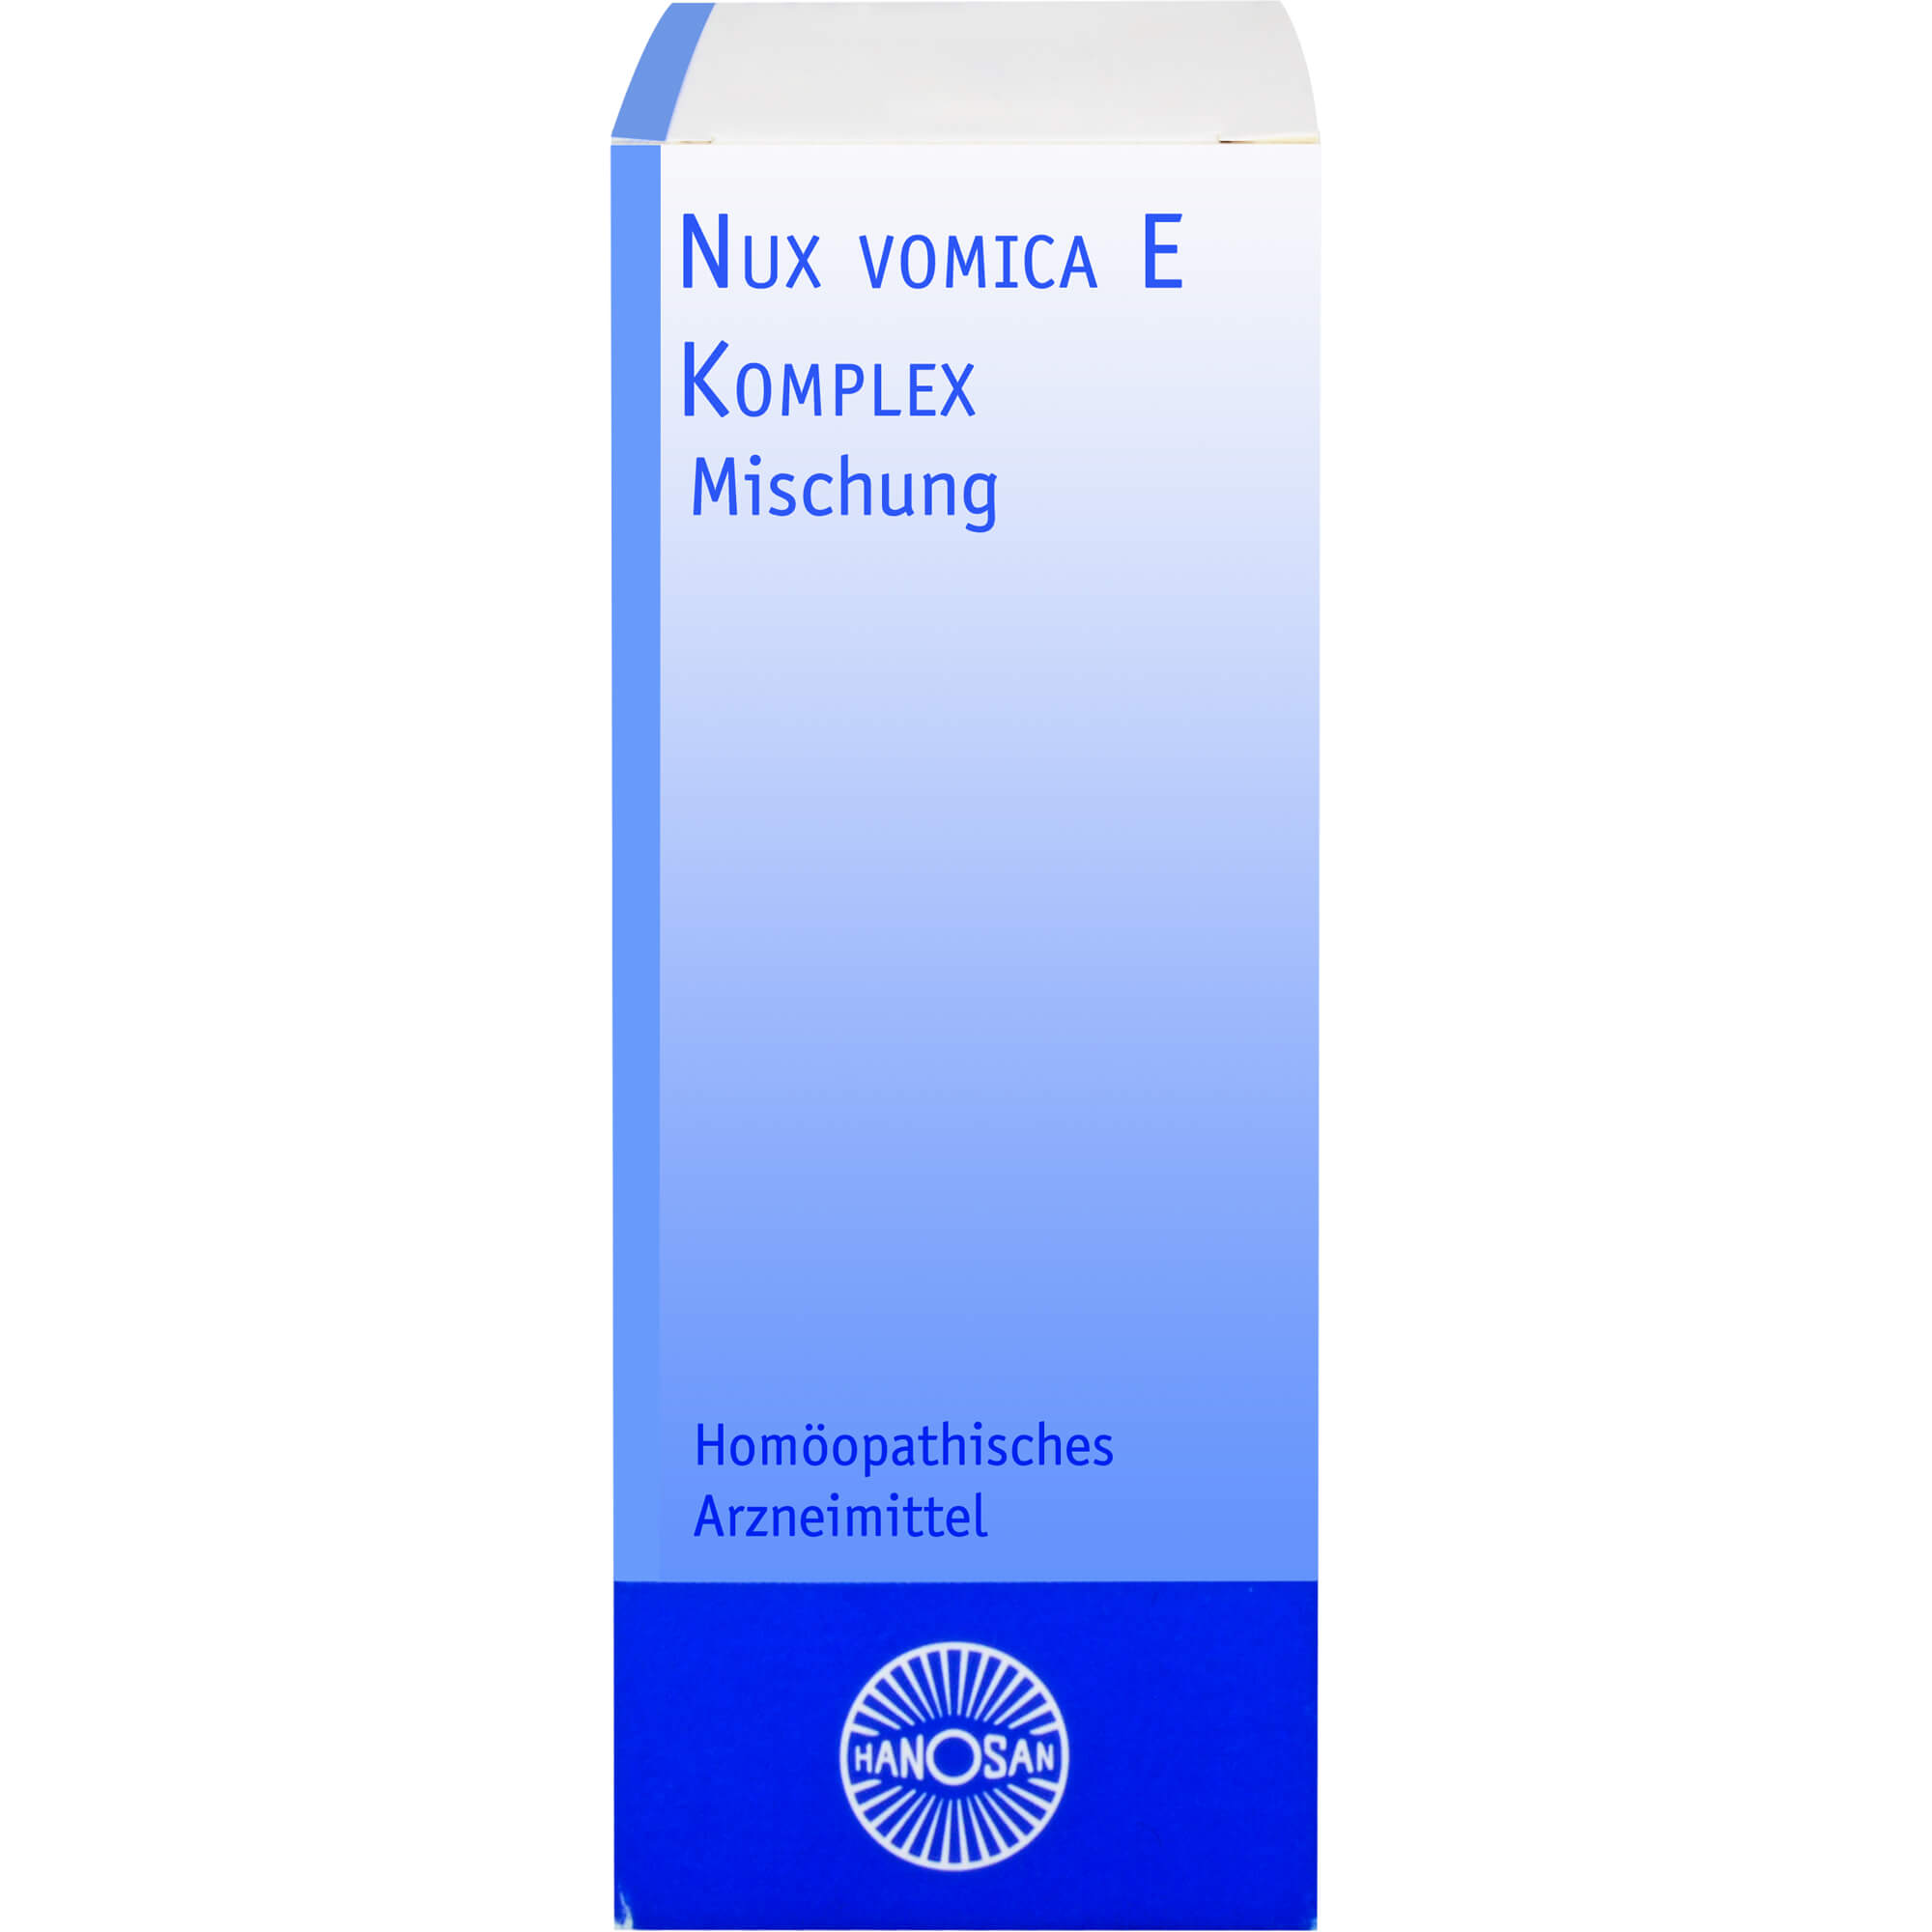 NUX VOMICA-E-Komplex-Hanosan Mischung